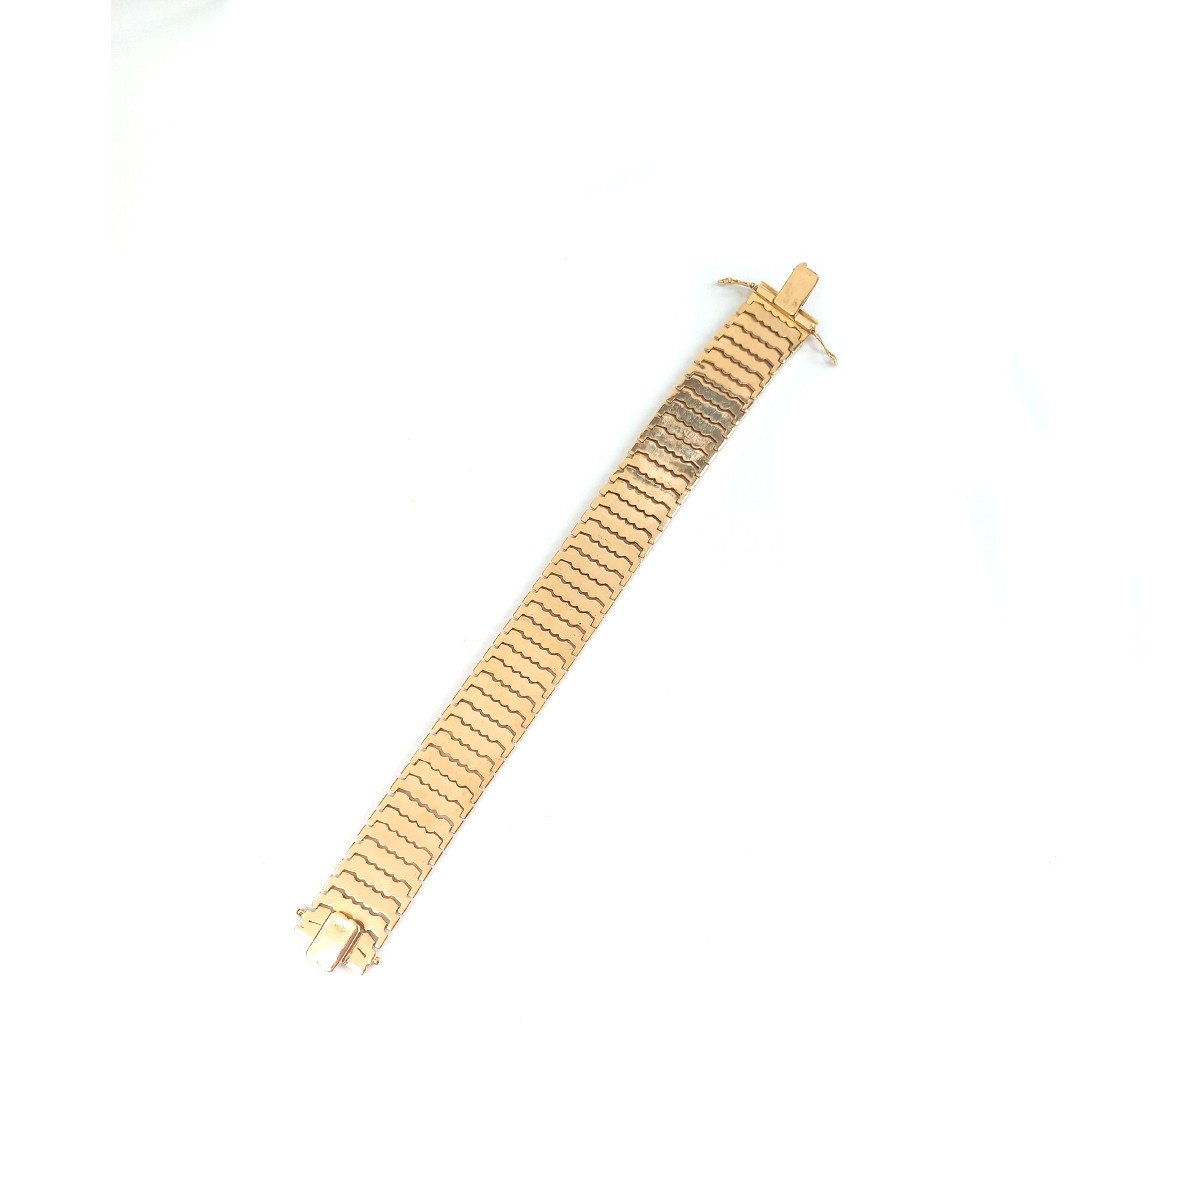 Bracelet d'occasion or 750 jaune maille fantaisie 18.5 cm - vue 3